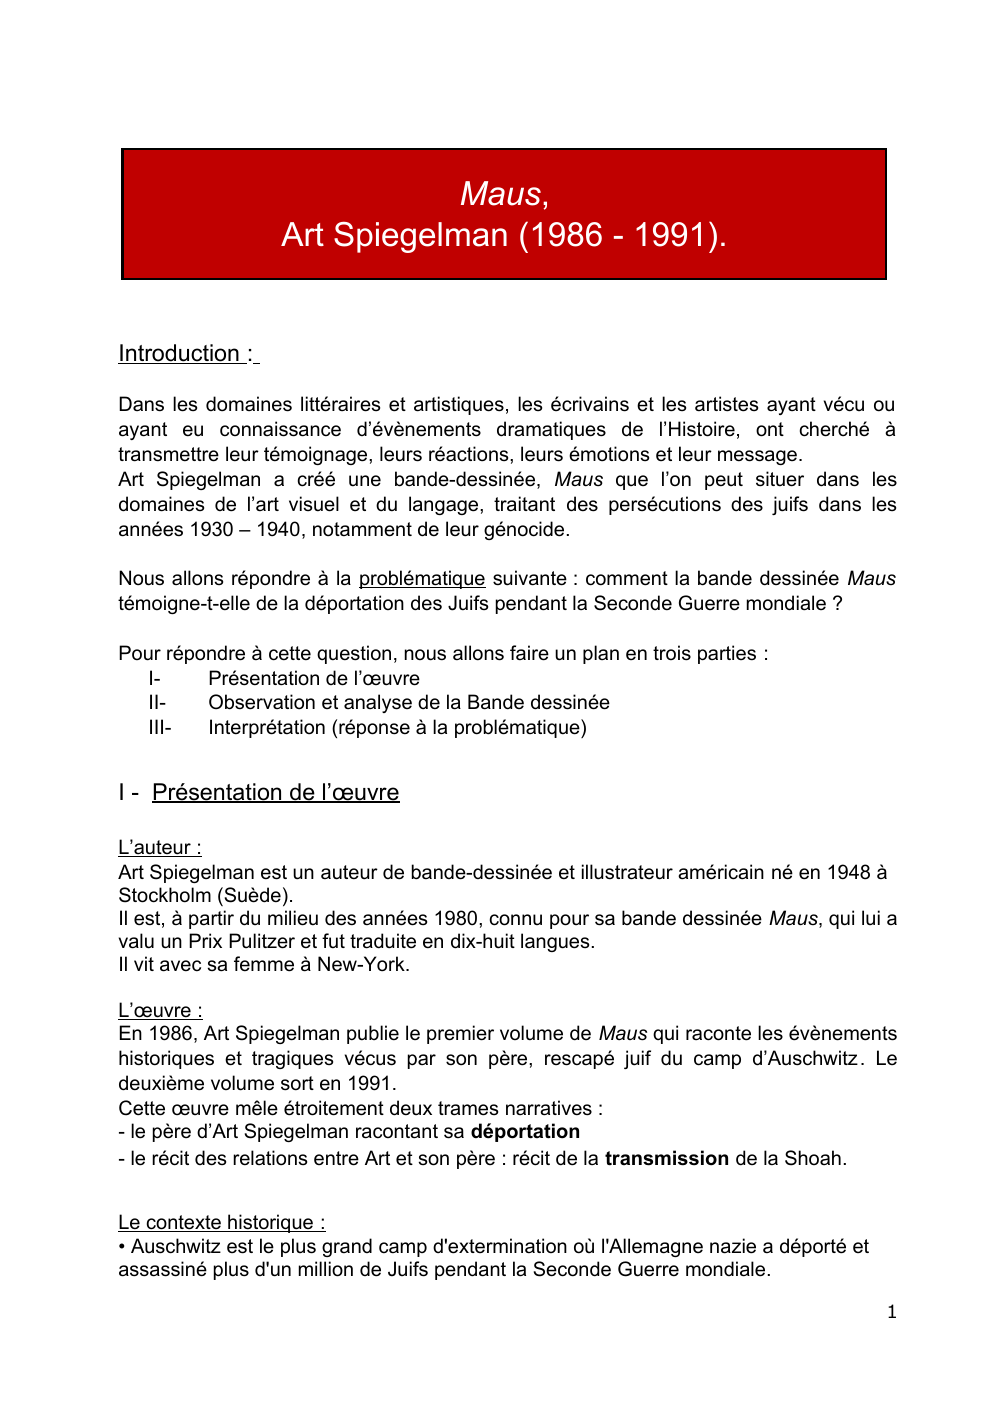 Prévisualisation du document oral brevet Maus d'Art Spiegelman